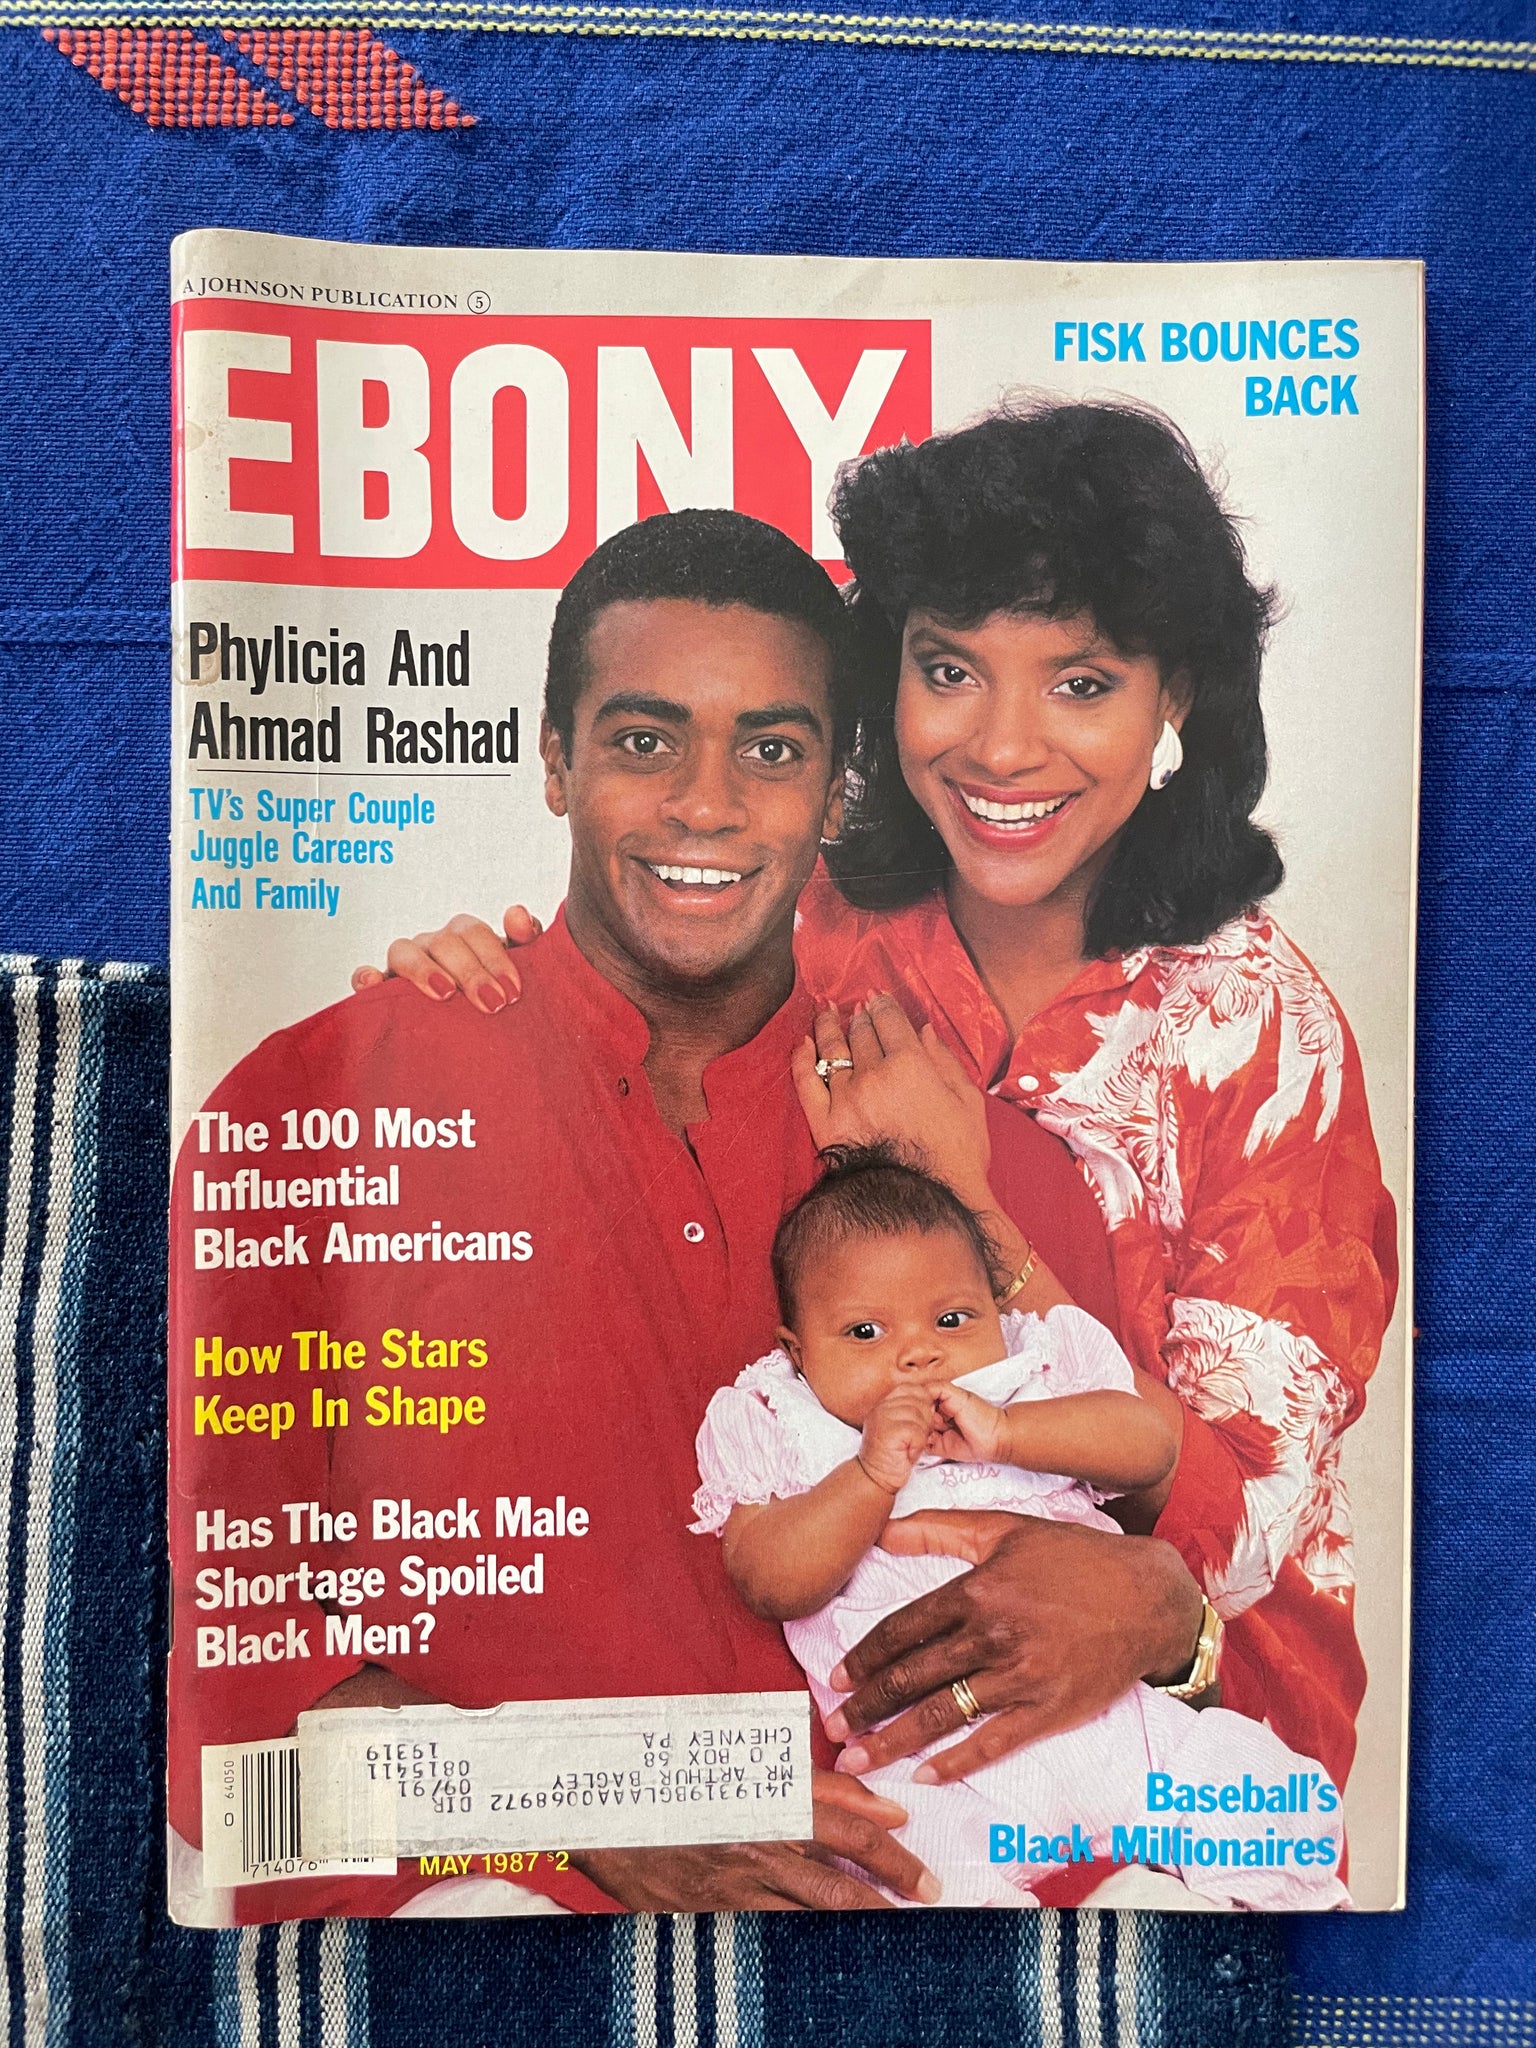 Vintage Ebony Magazine Issues (Please Select)